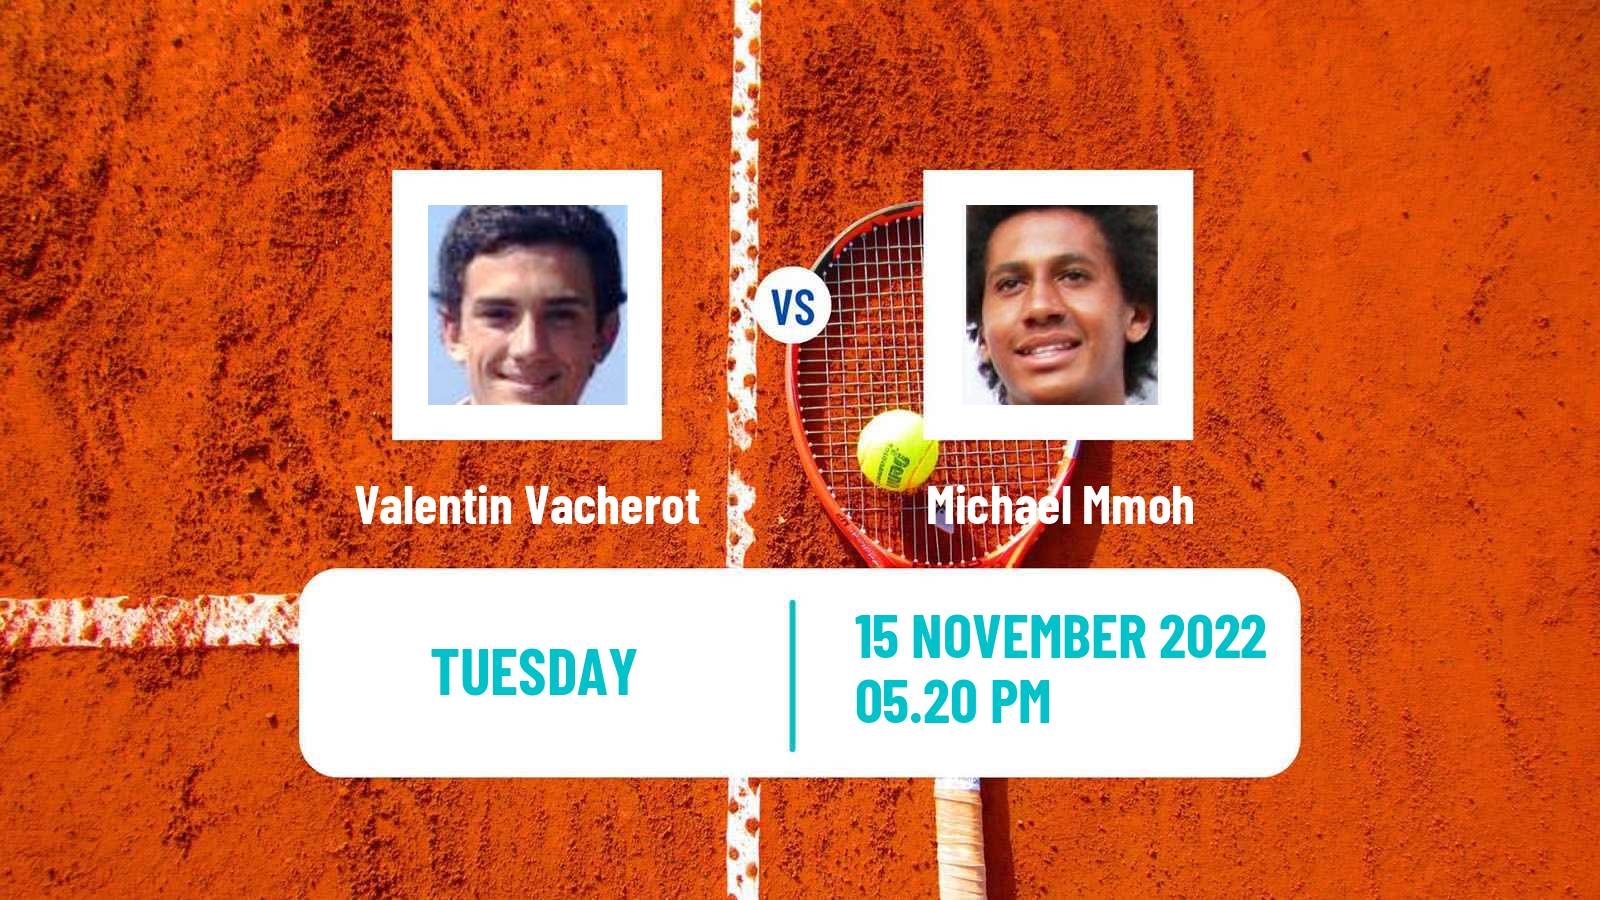 Tennis ATP Challenger Valentin Vacherot - Michael Mmoh